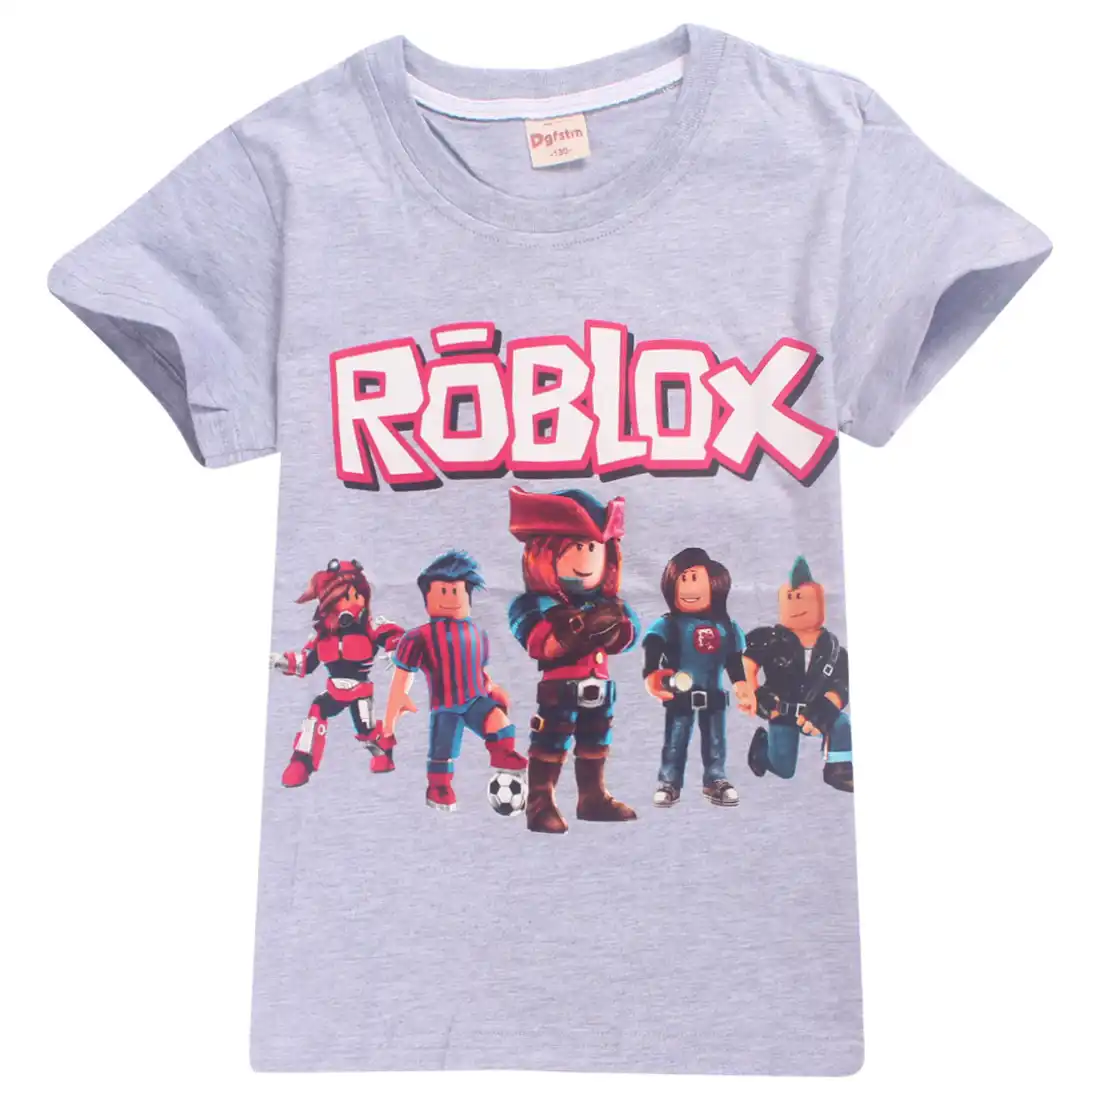 Roblox Shirt Free 2019 Nils Stucki Kieferorthopade - how to make your own shirt on roblox 2019 nils stucki